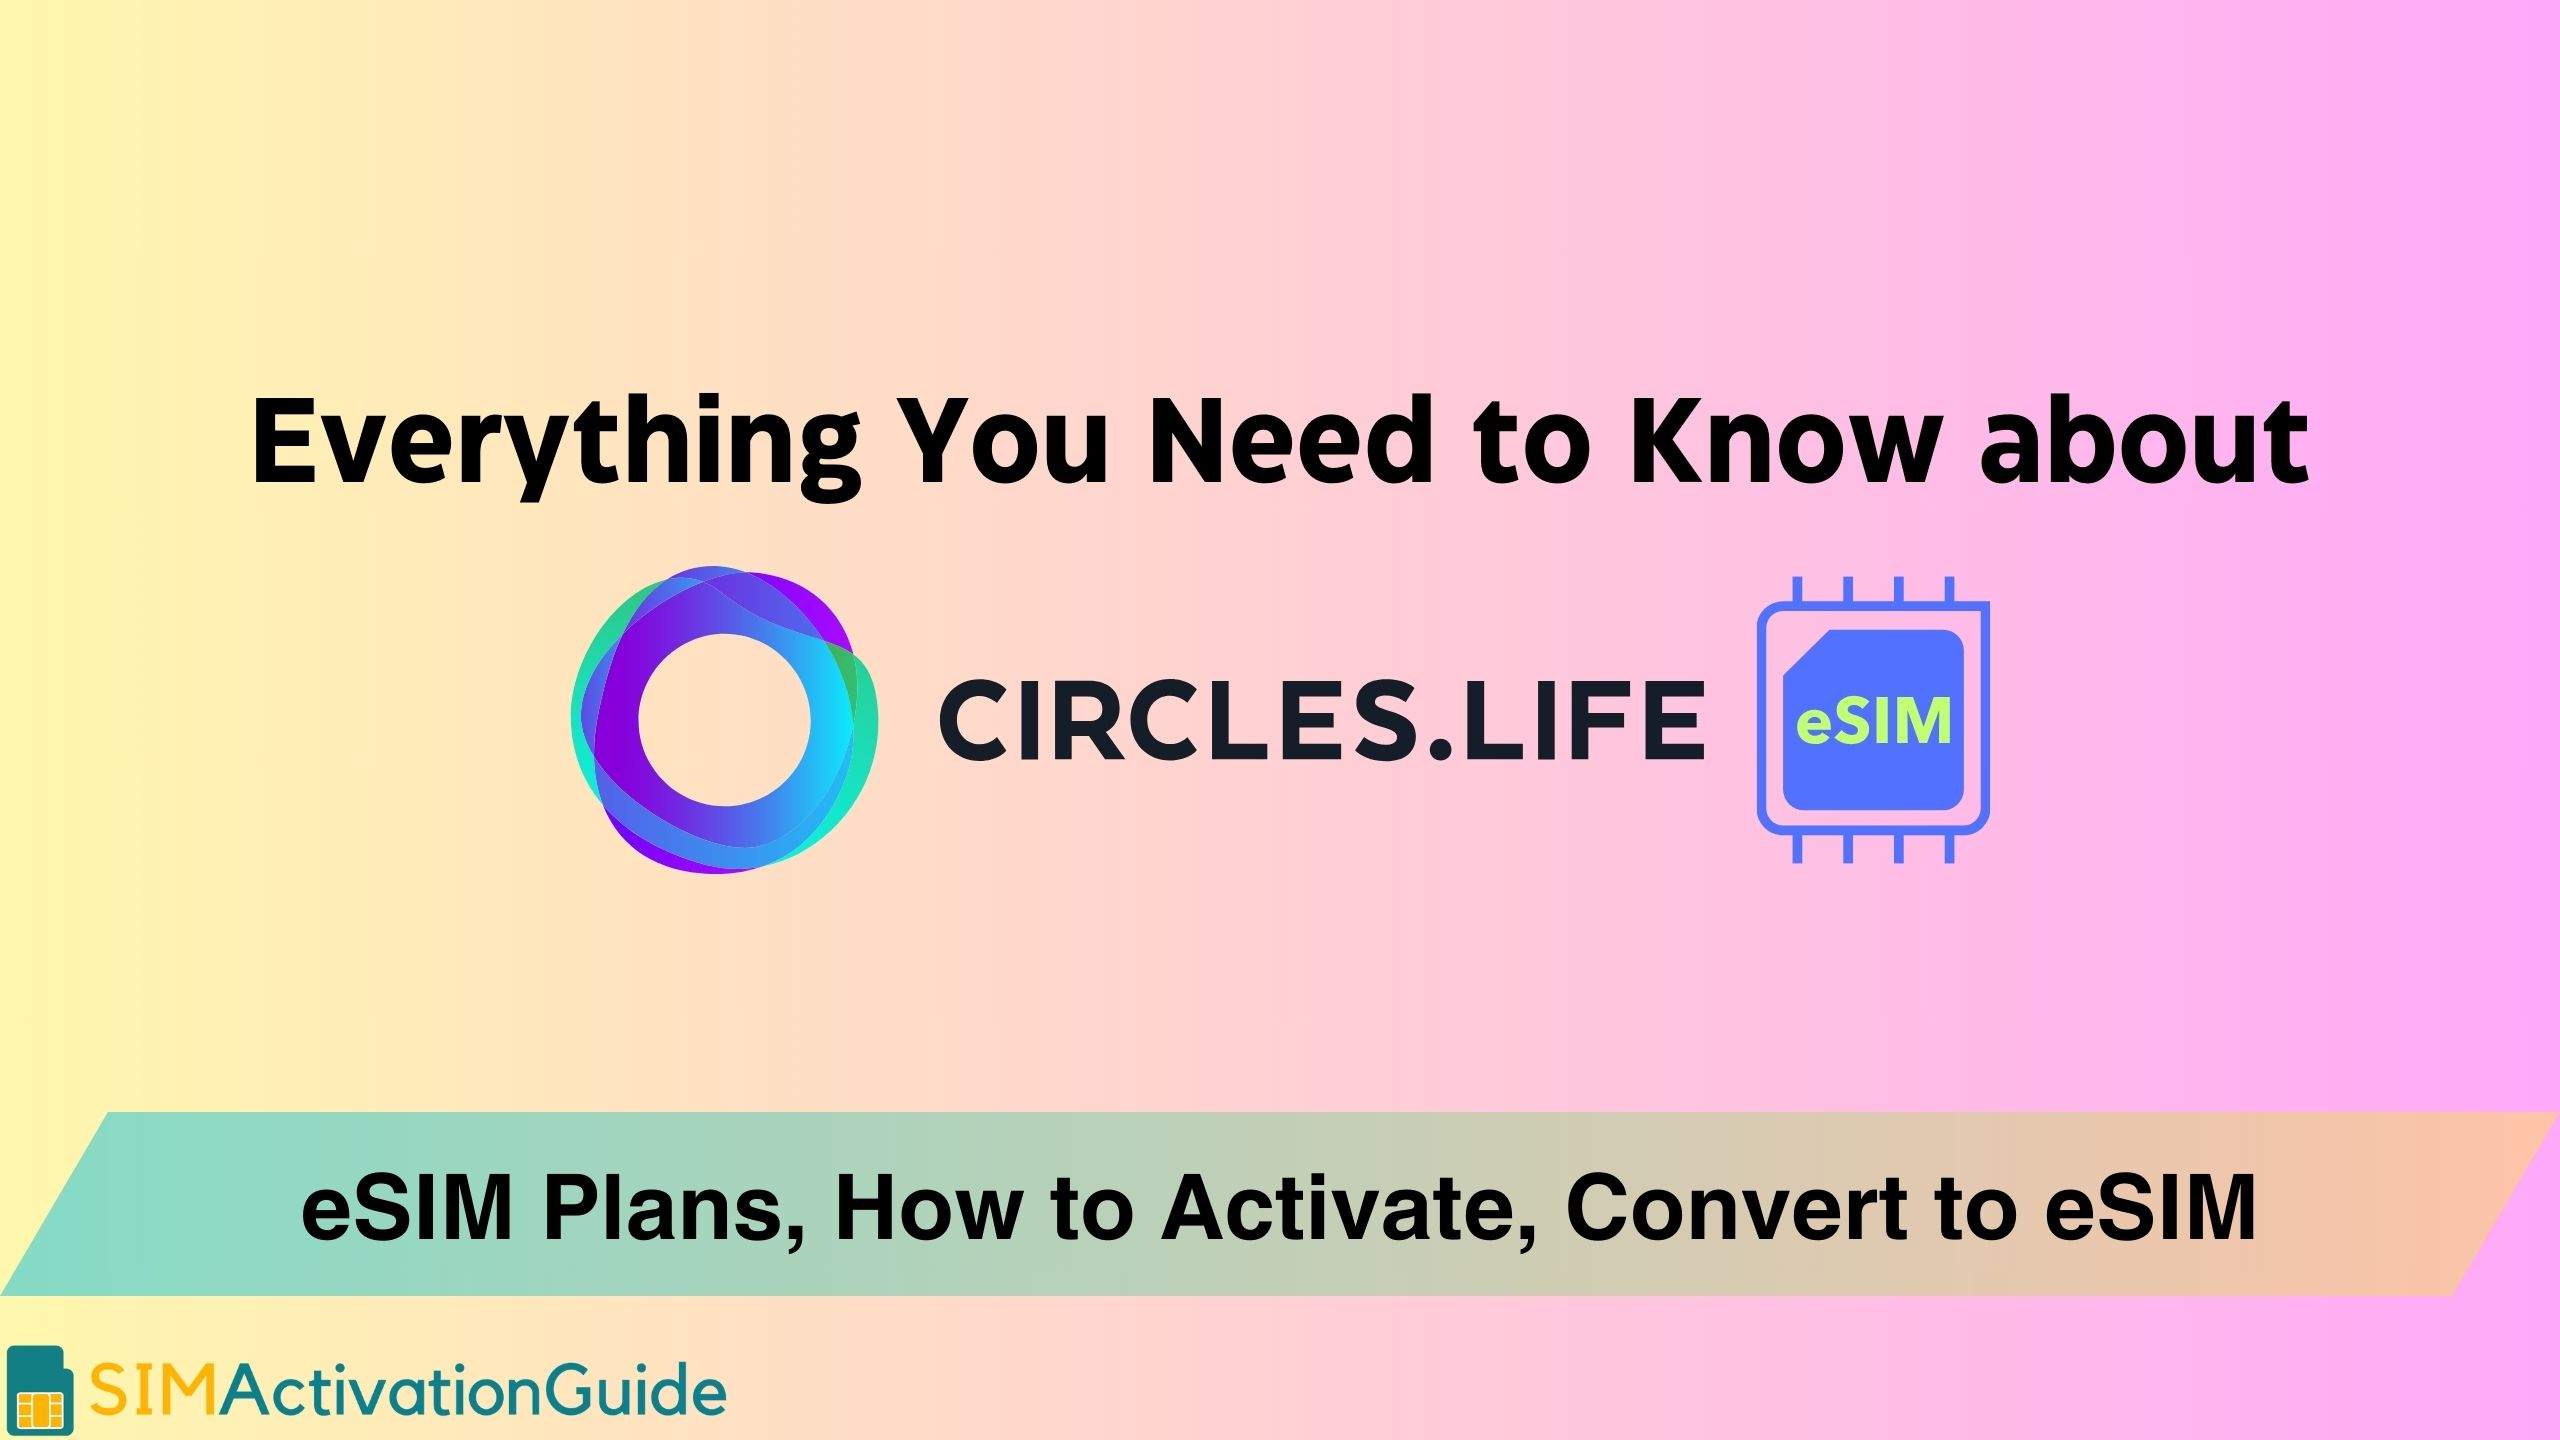 Activate Your Circles.Life eSIM in Minutes